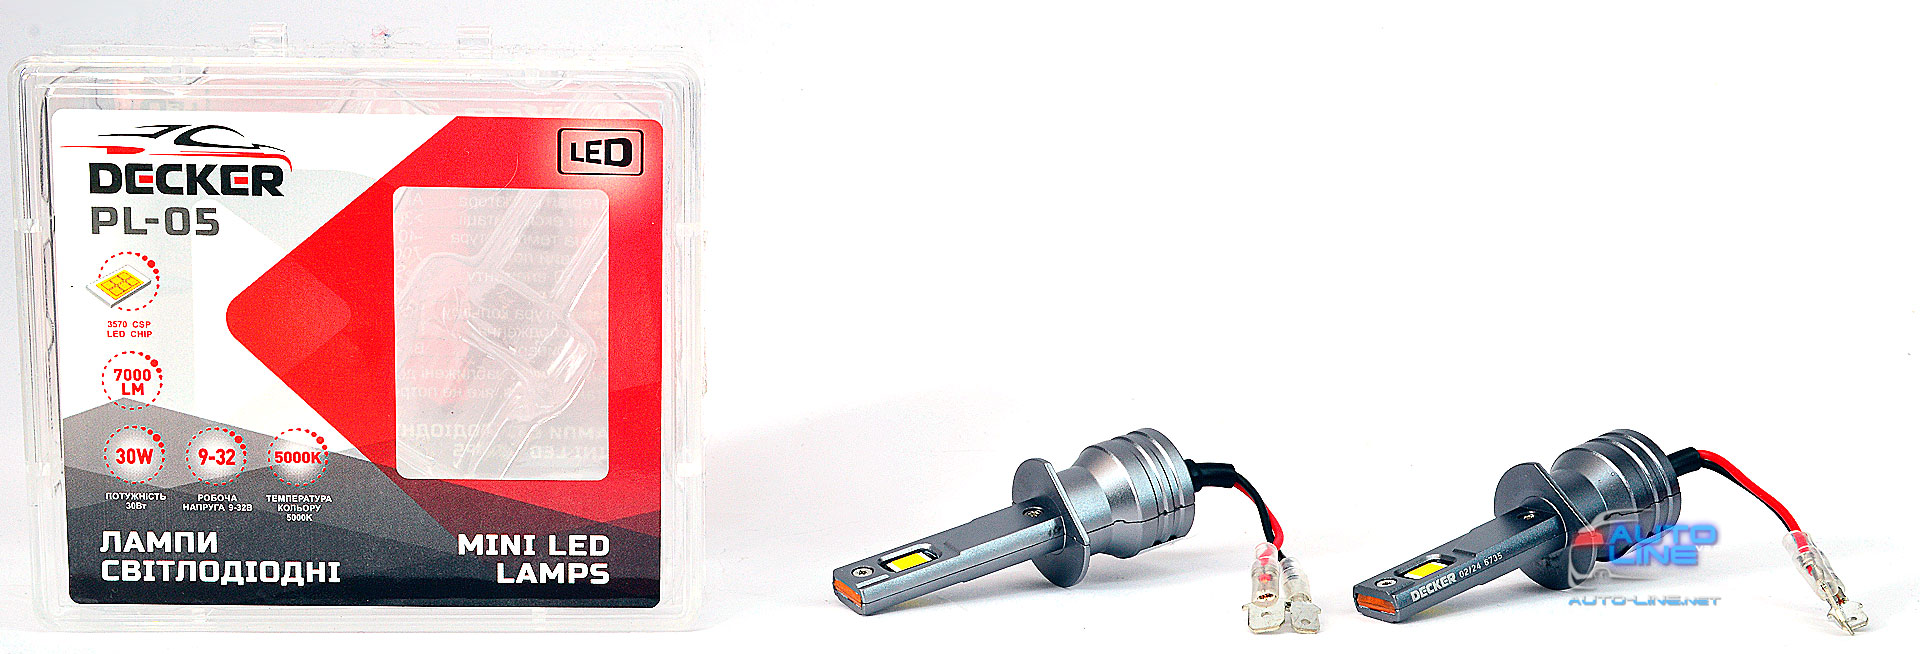 Decker LED PL-05 5K H1  — автомобильная LED-лампа H1 под галогенку, без вентилятора, 5000K